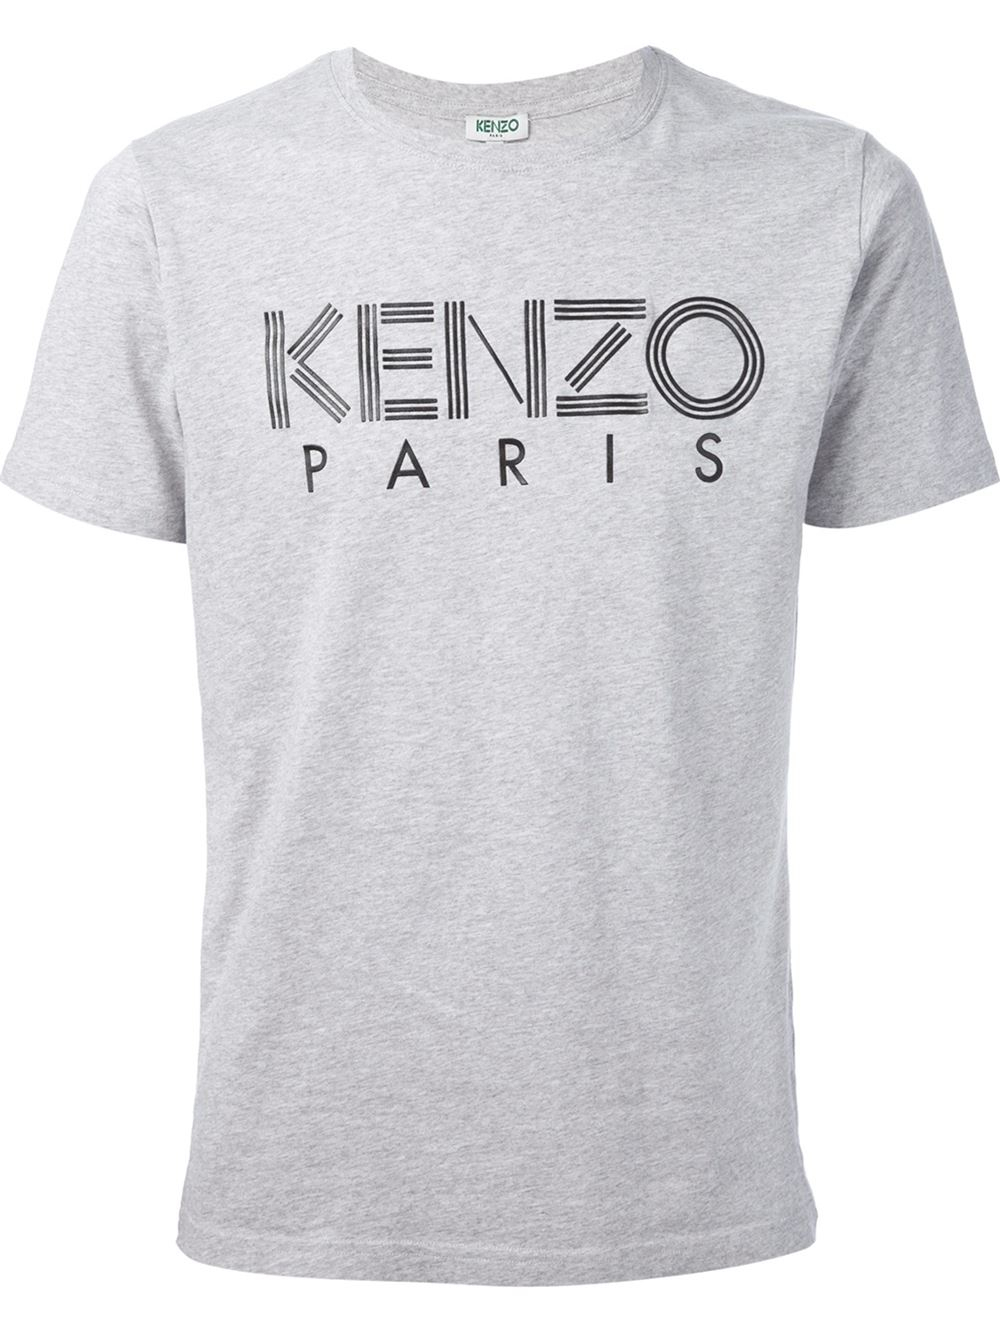 mens grey kenzo t shirt